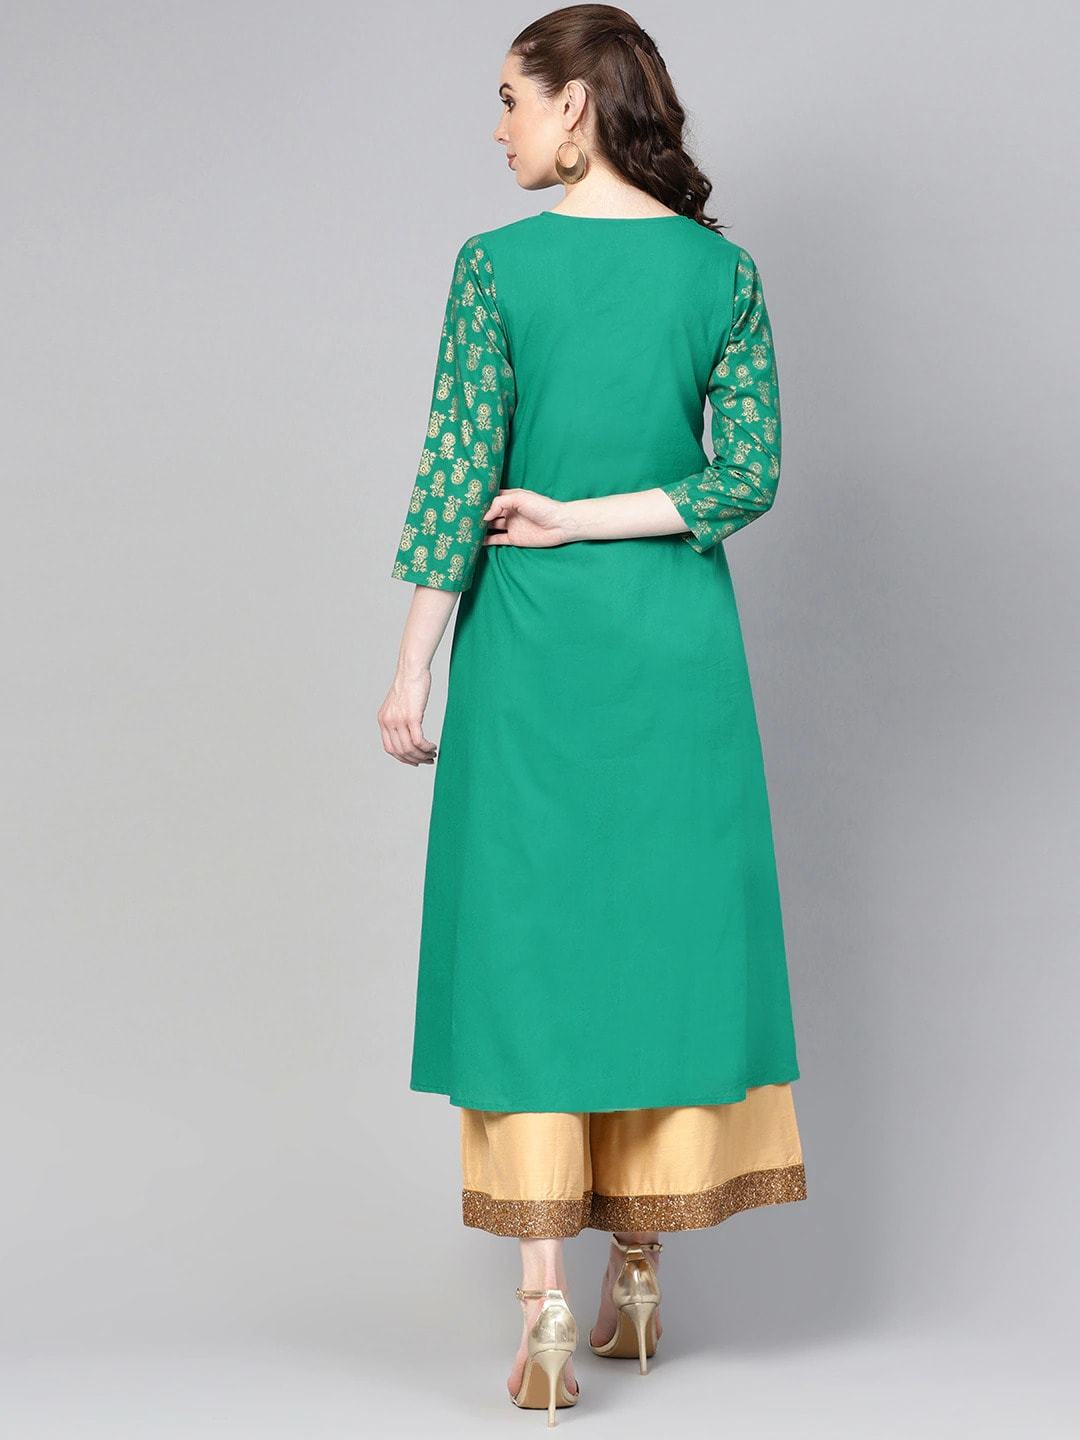 Women's Green & Gold-Coloured Floral Printed A-Line Kurta - Meeranshi